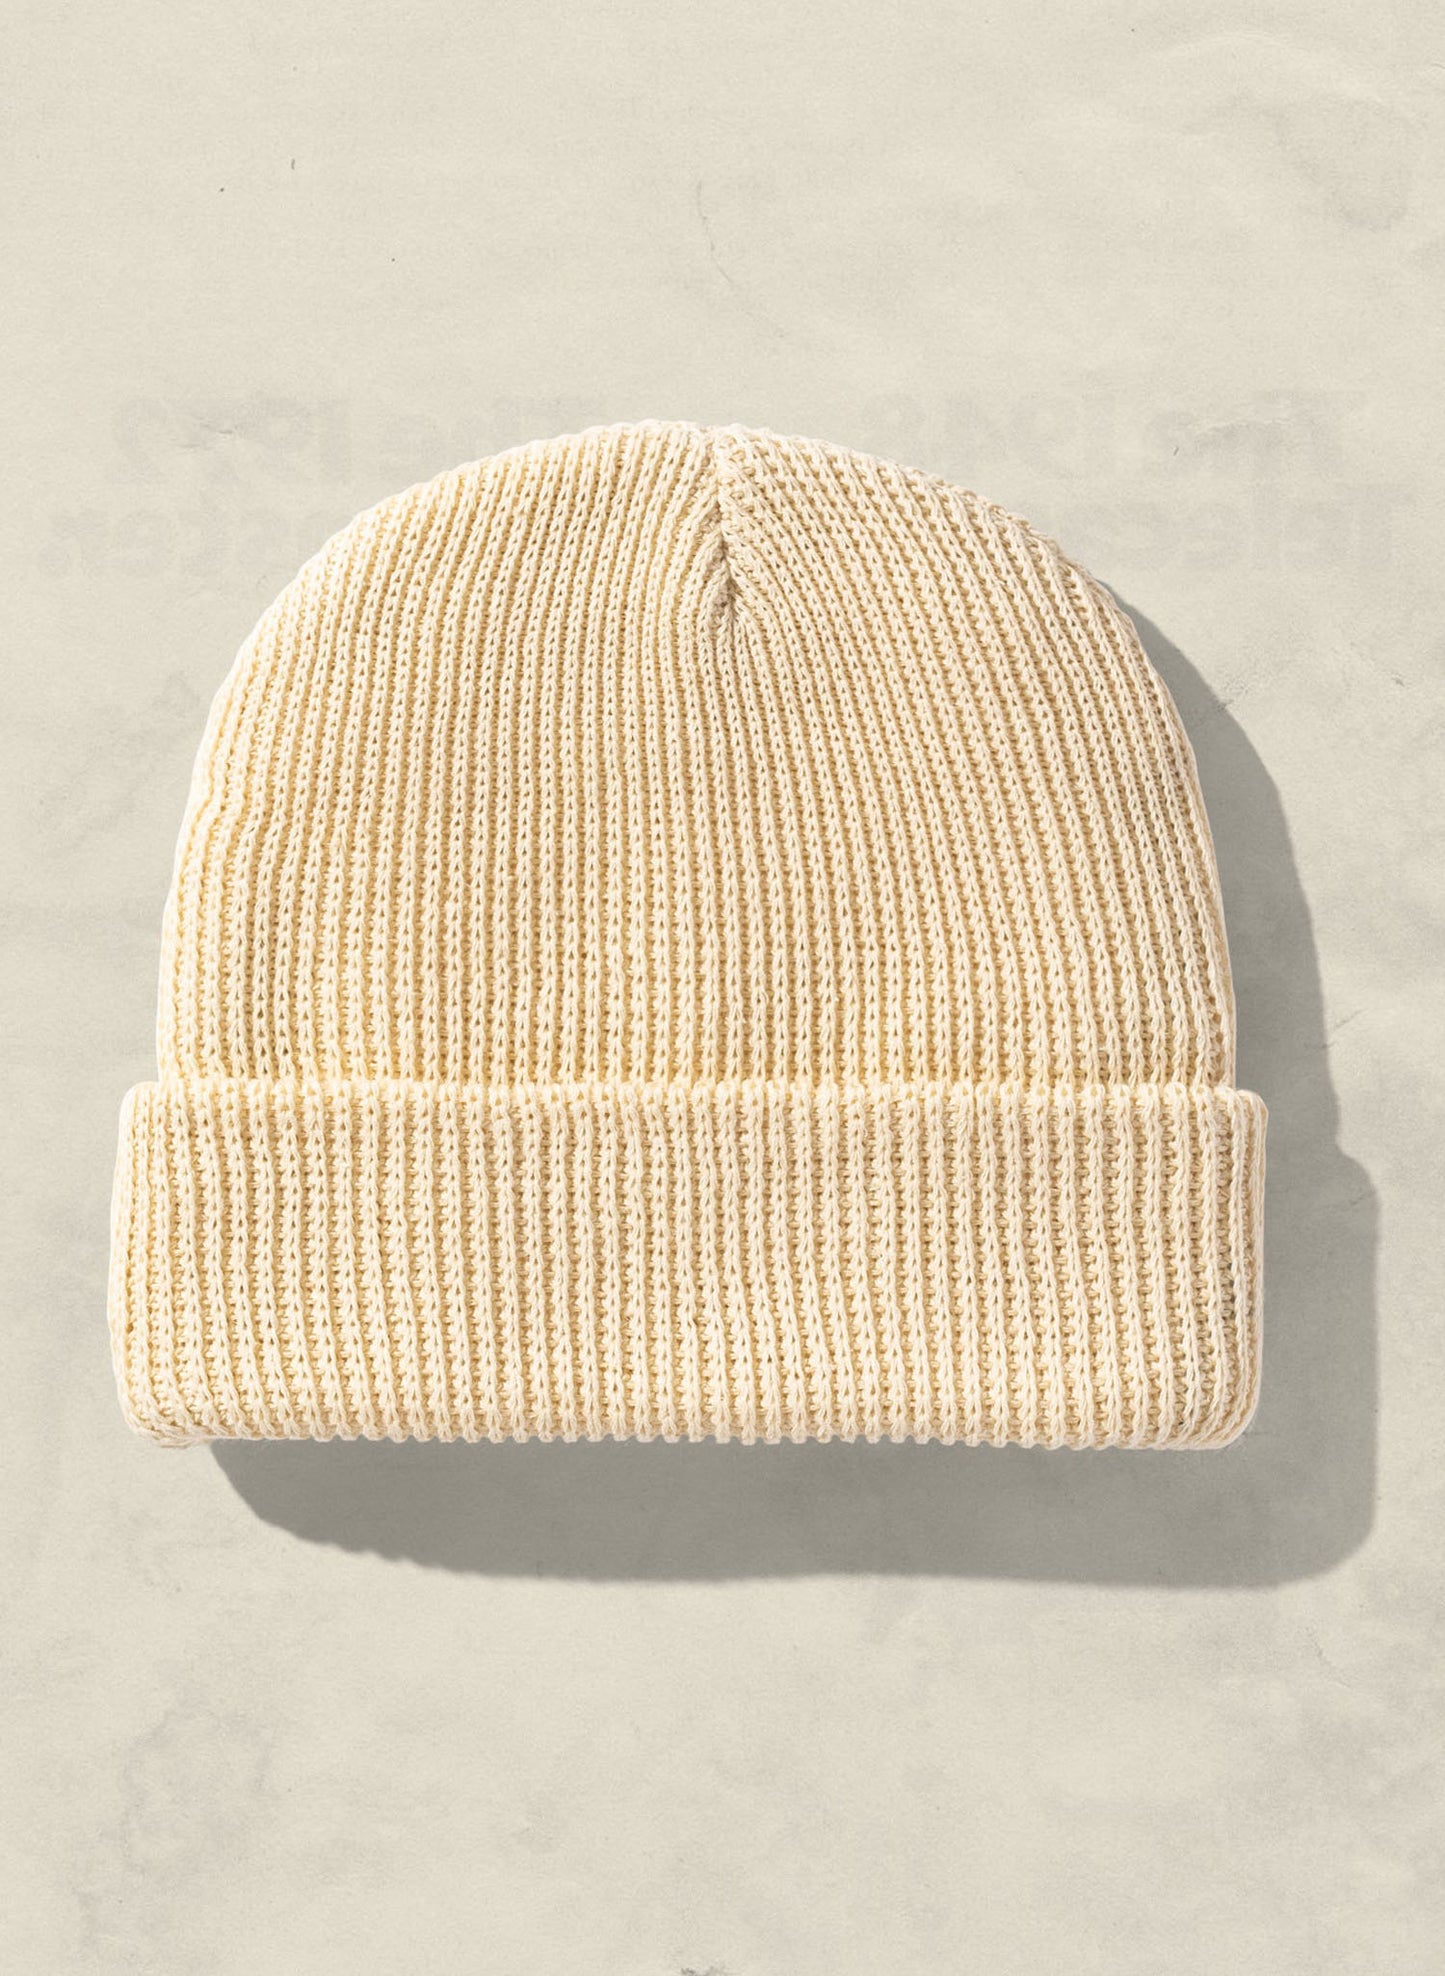 Weld Mfg Hemp Slacker Knit Ribbed Beanie Hat - Vintage Inspired Warm Comfortable Hat - Cream